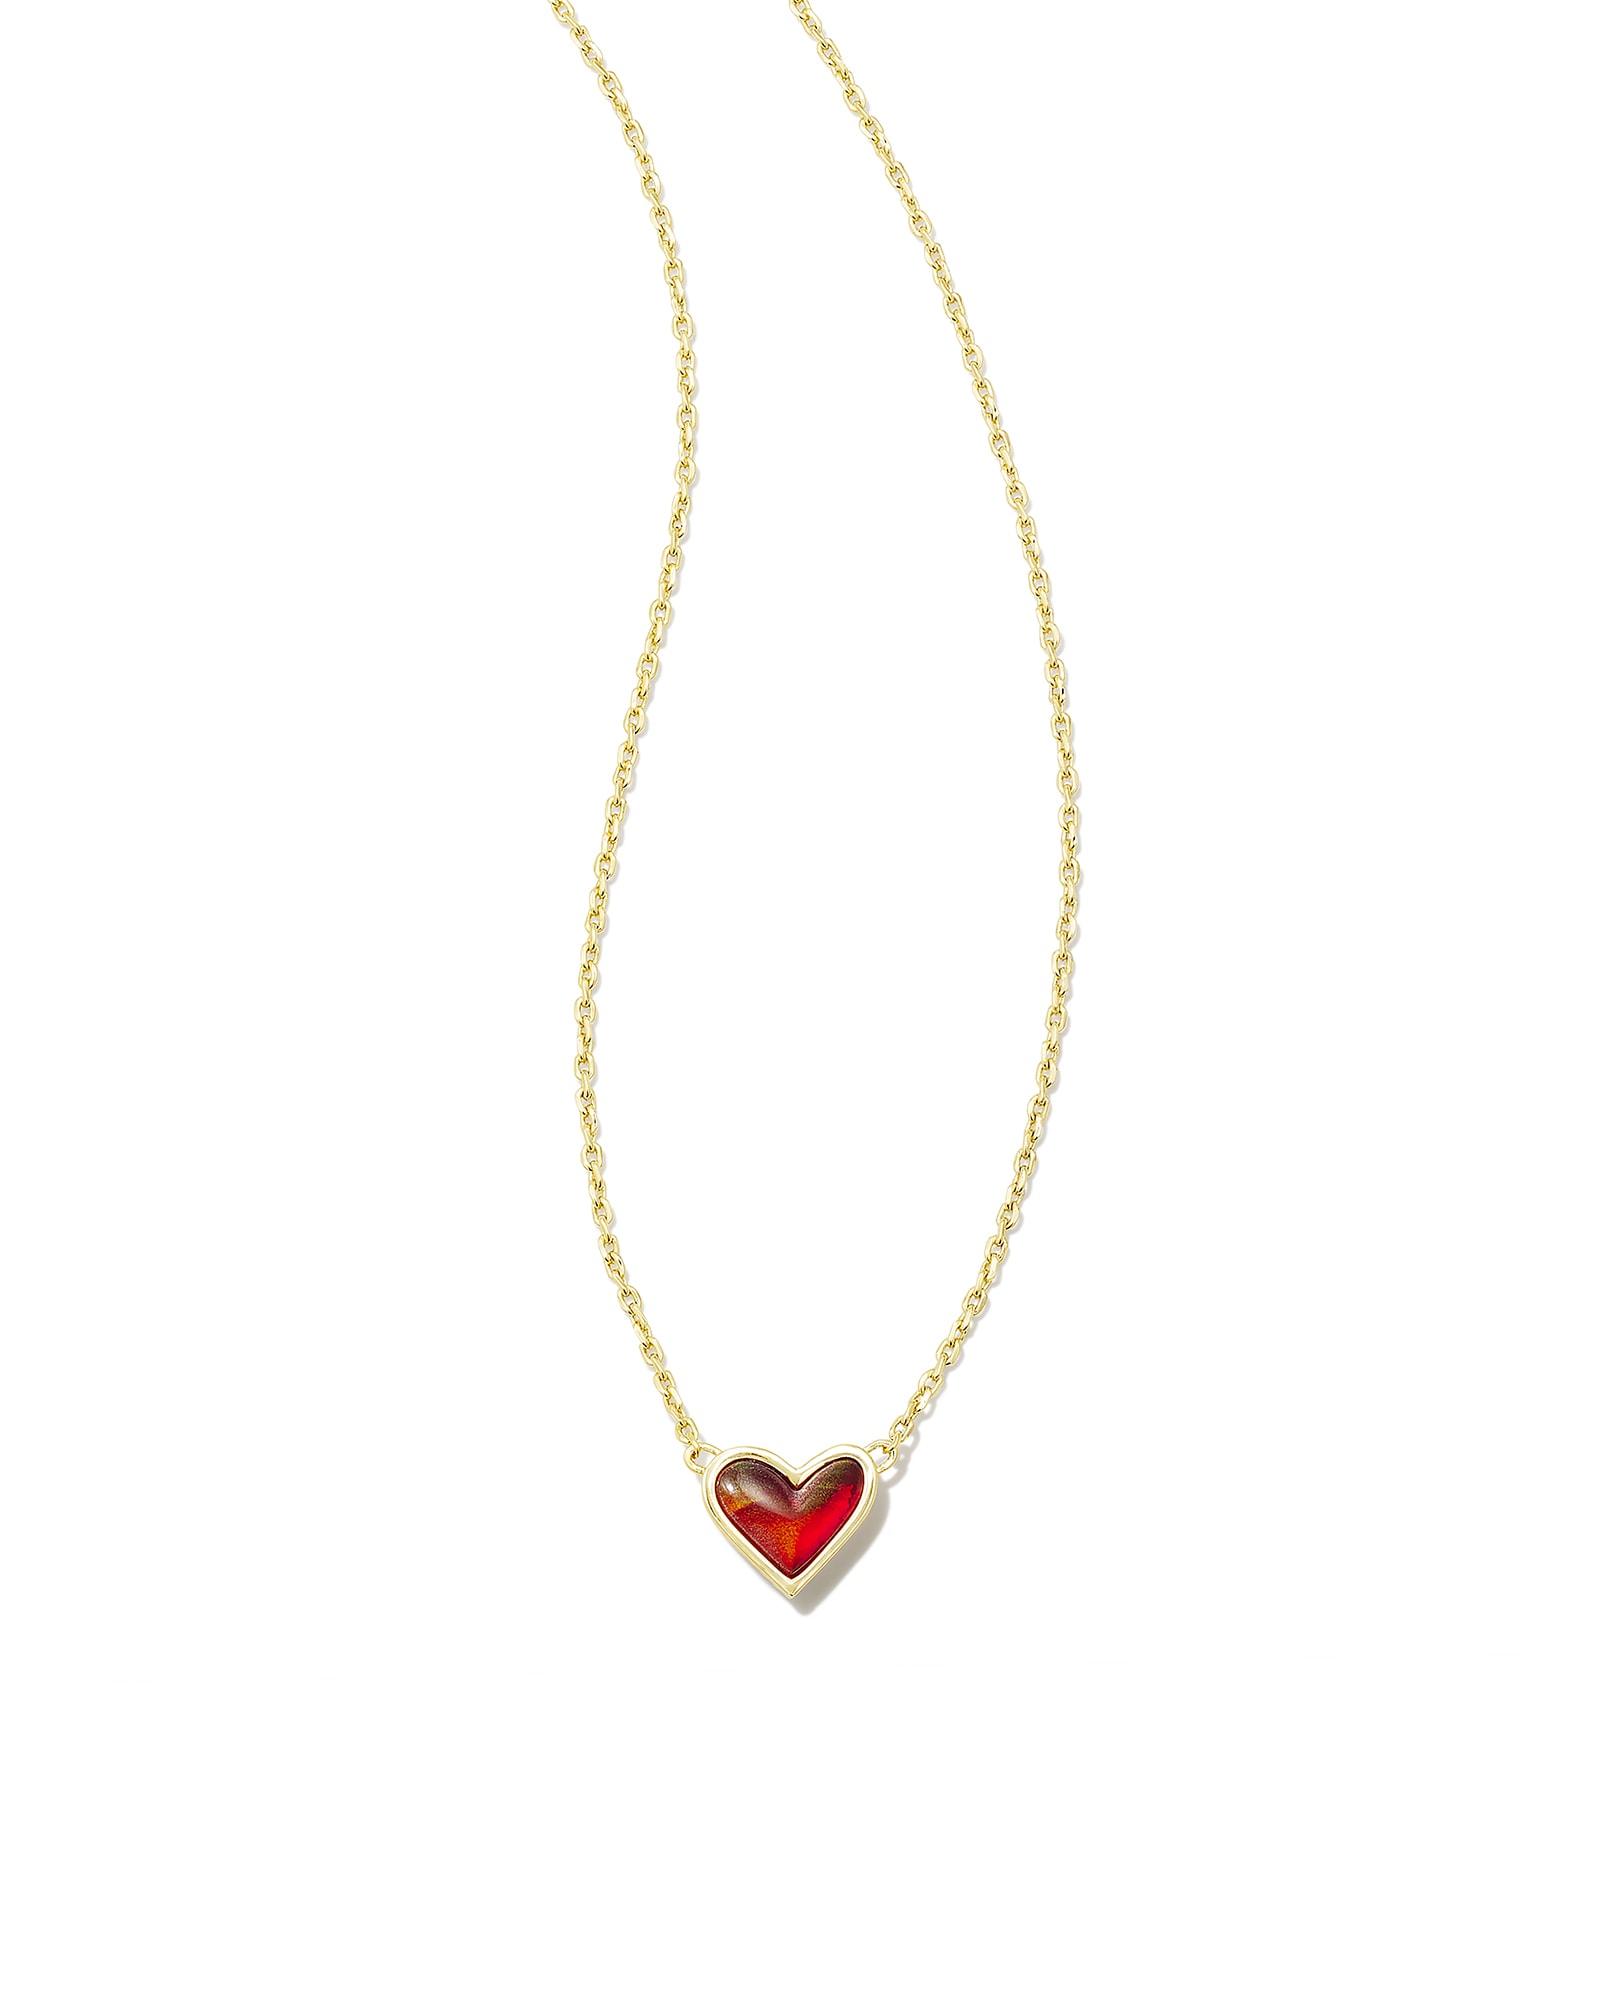 Framed Ari Heart Gold Short Pendant Necklace in Red Opalescent Resin | Kendra Scott